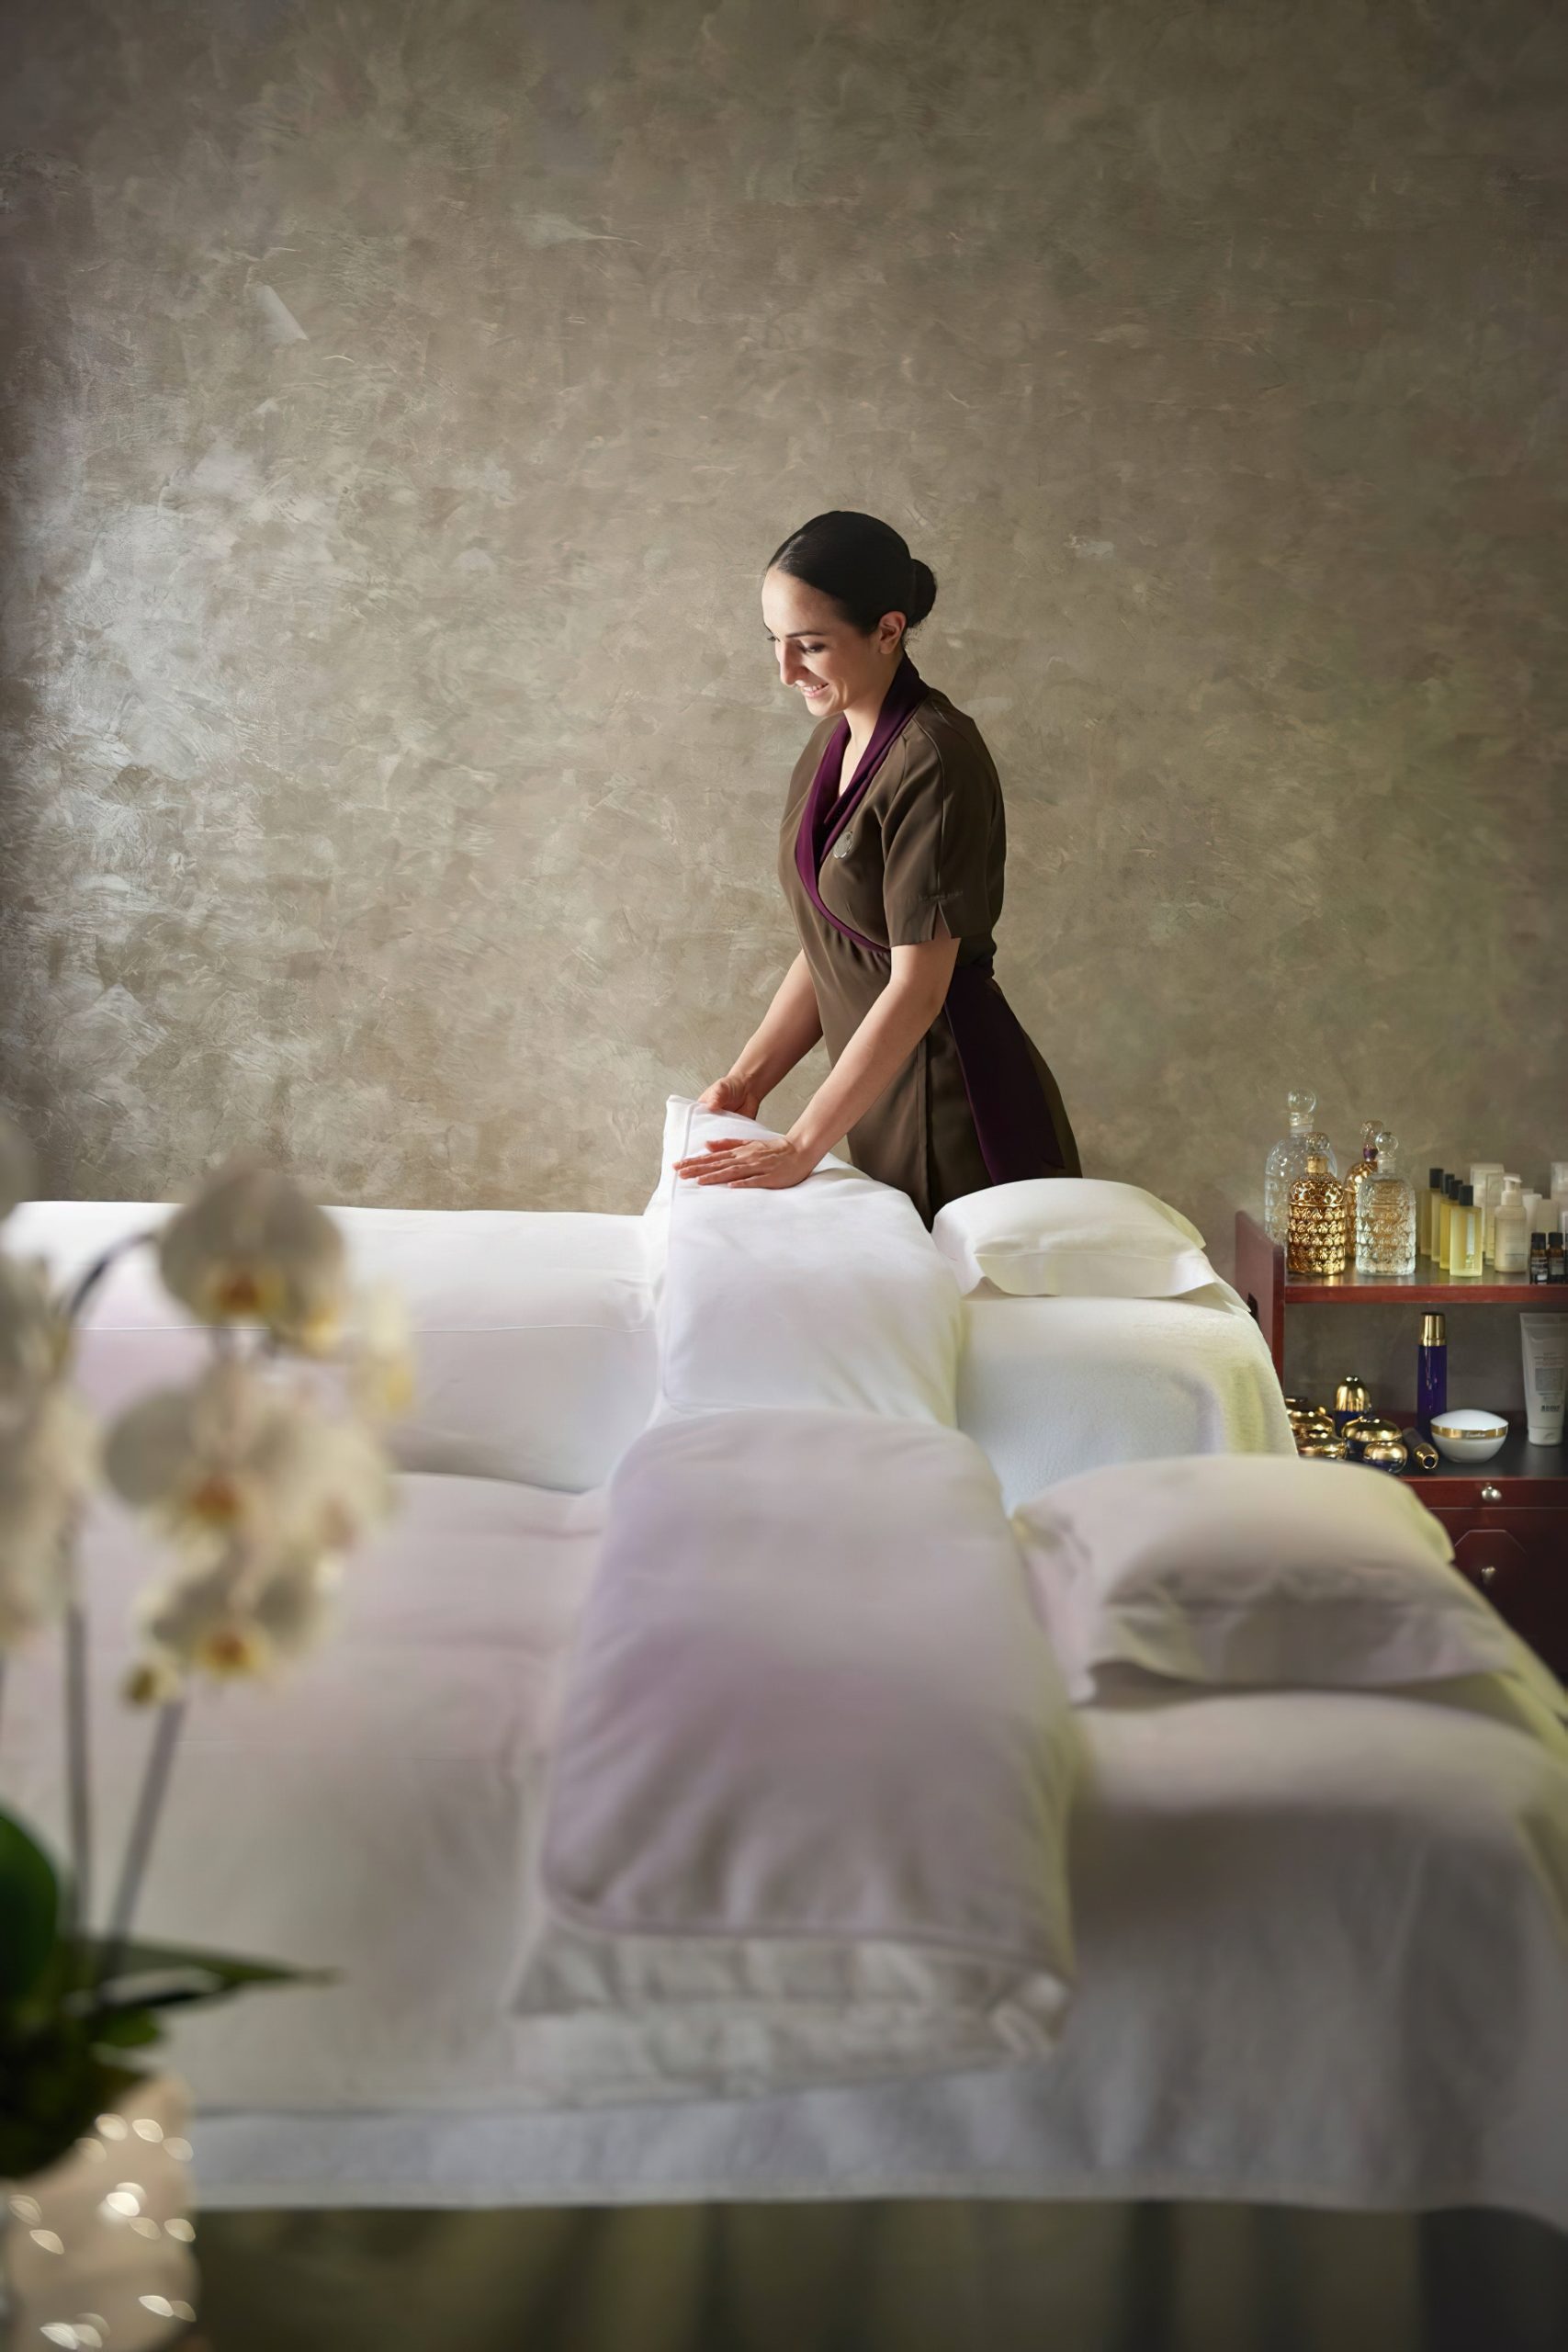 067 – Mandarin Oriental, Paris Hotel – Paris, France – Spa Massage Tables